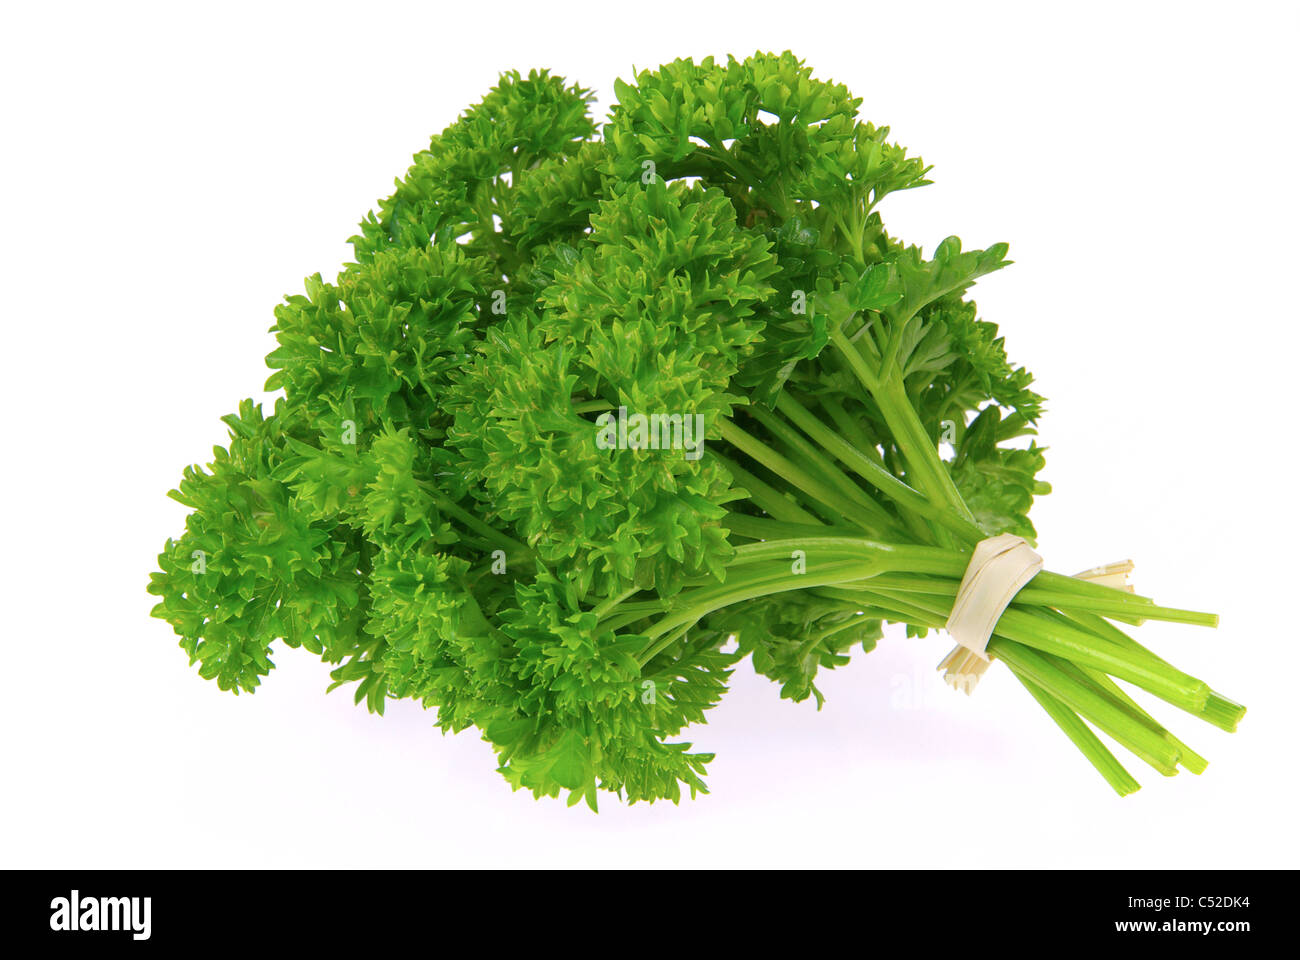 Petersilie - parsley 21 Stock Photo